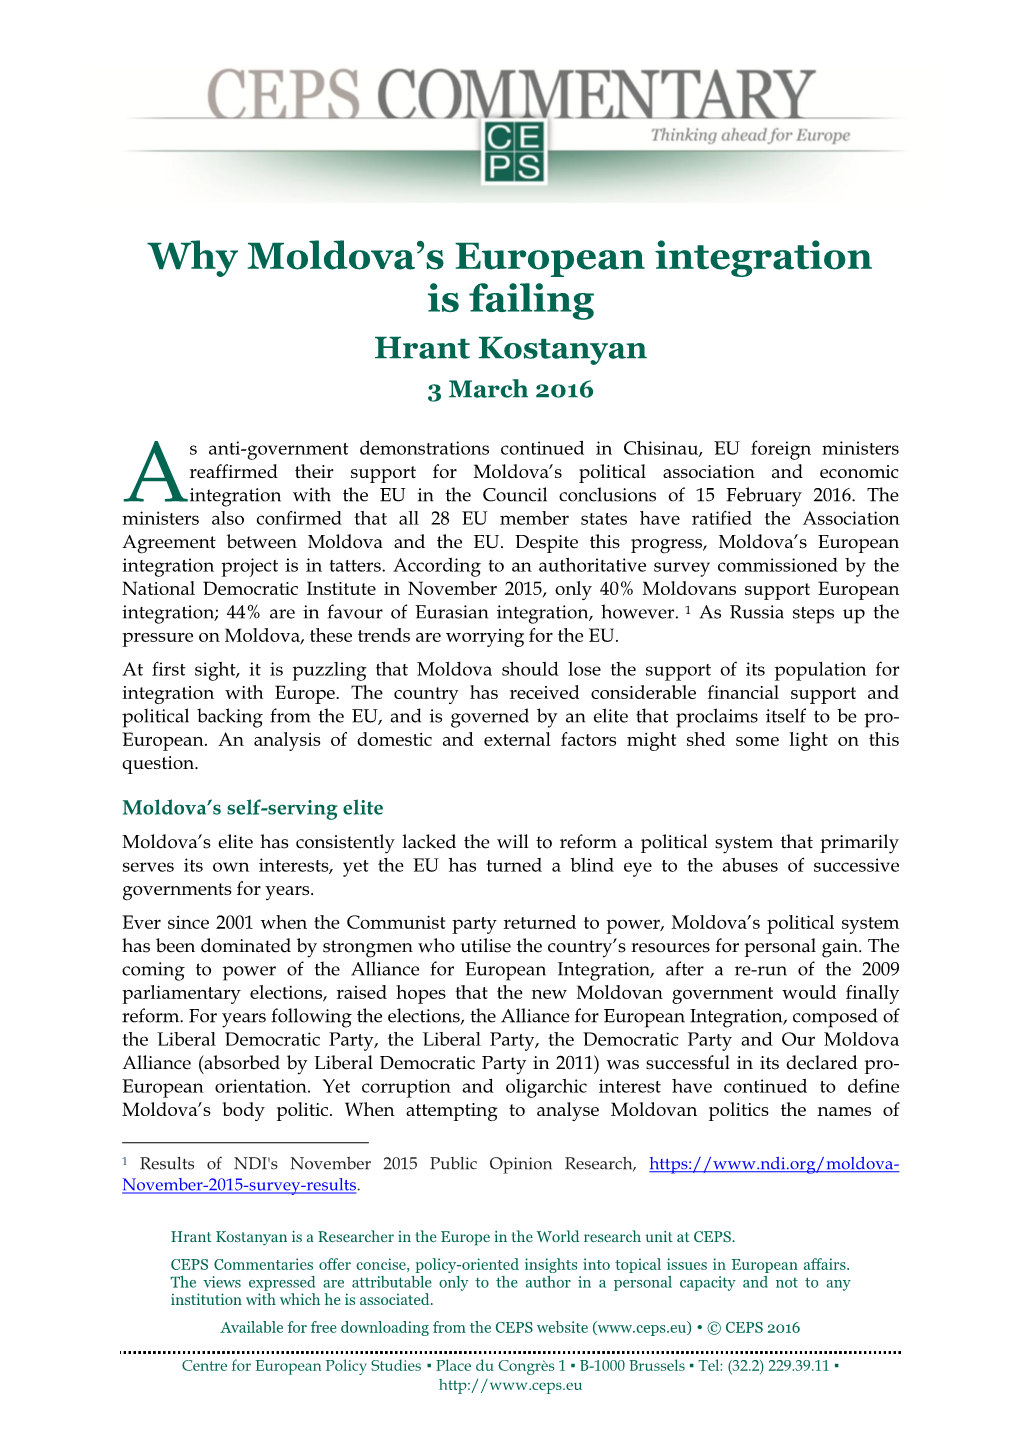 Why Moldova's European Integration Is Failing